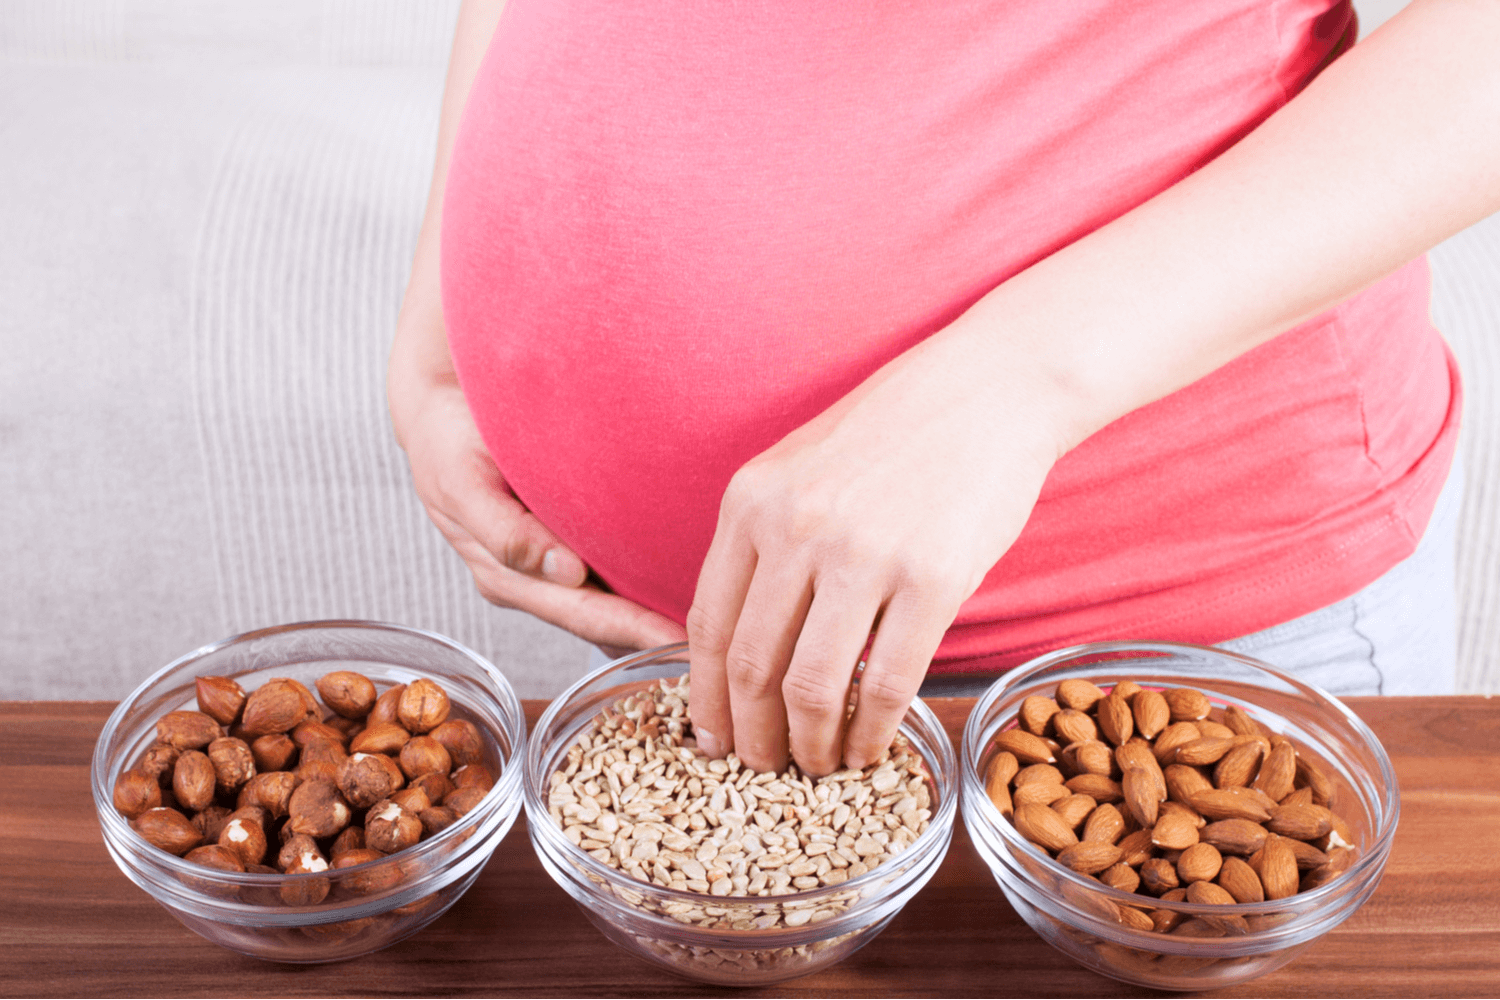 Benefits of Pumpkin Seeds During Pregnancy